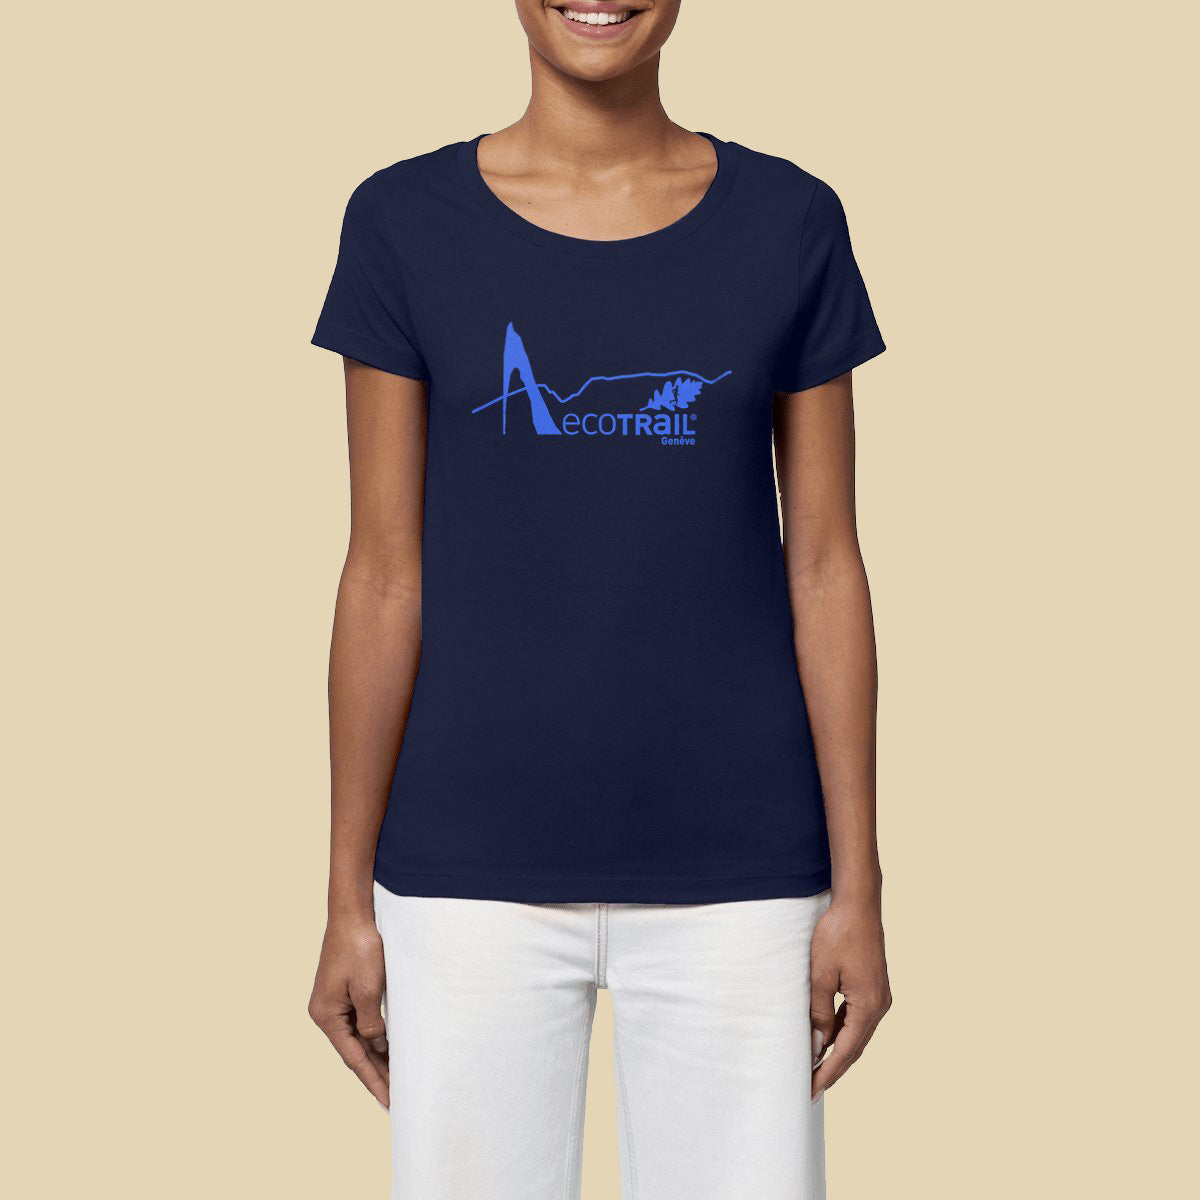 EcoTrail Geneve T-shirt Femme - Premium 100% Bio